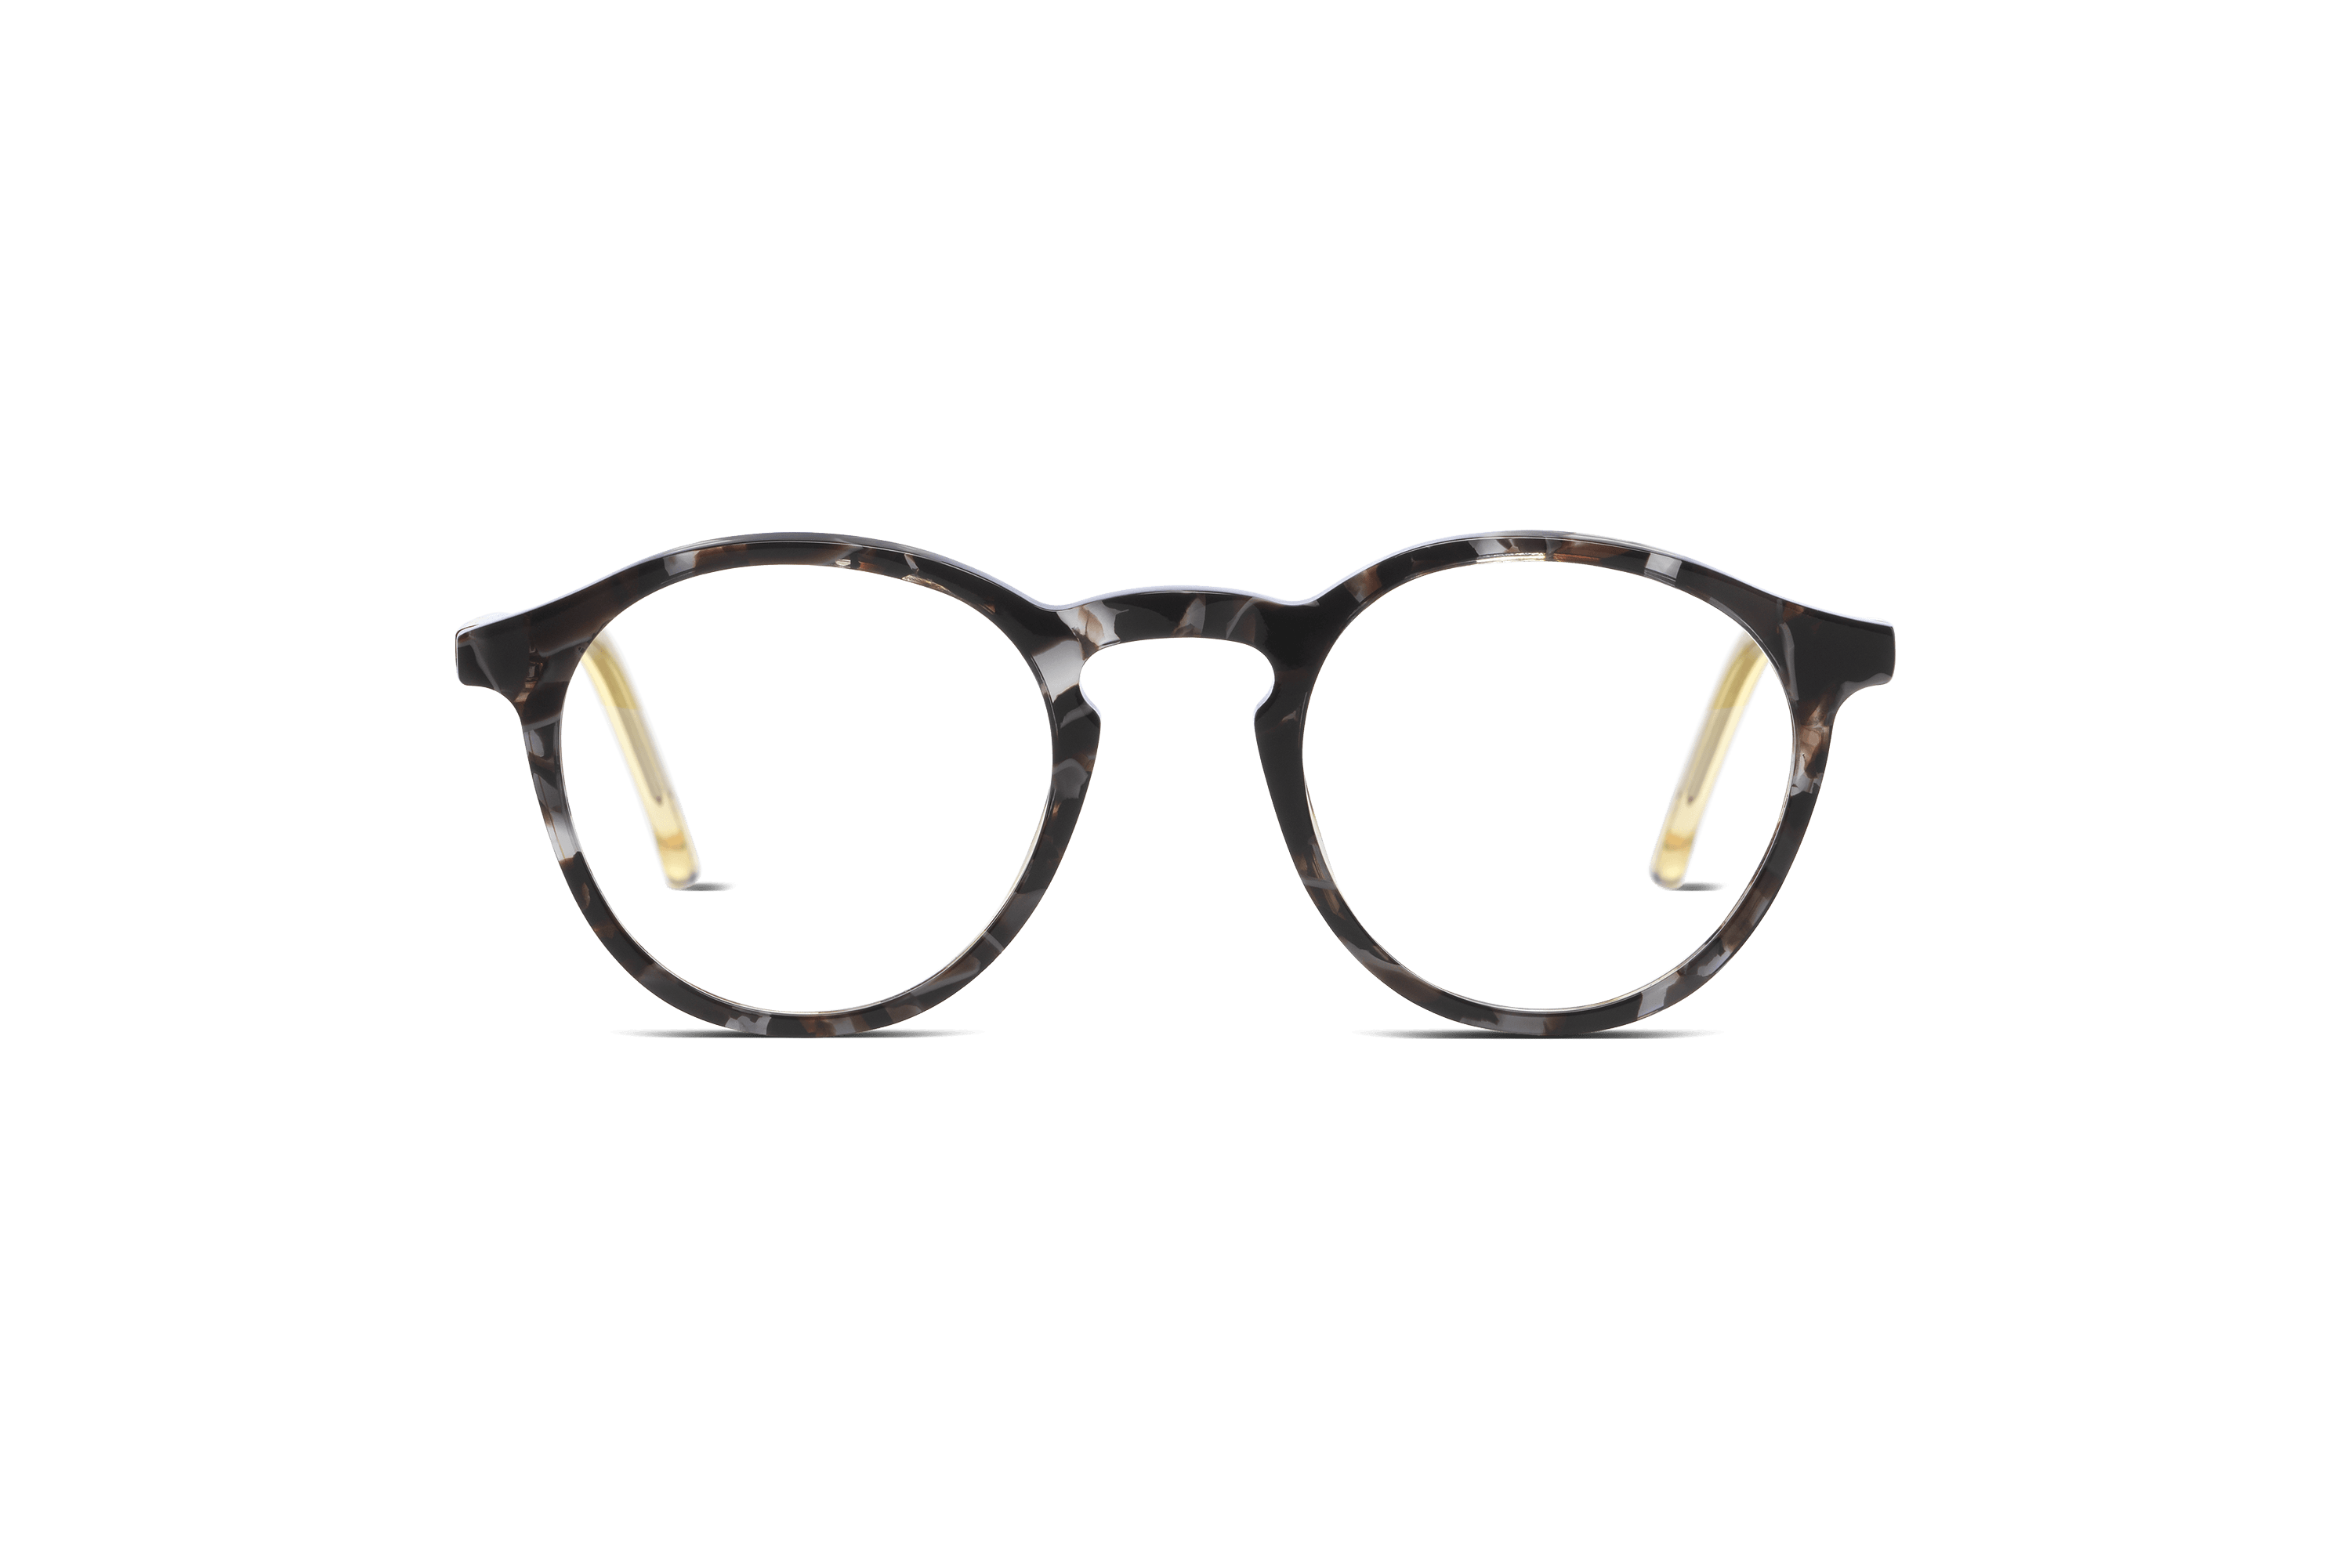 Komono Martin Safari Ekran Gözlüğü